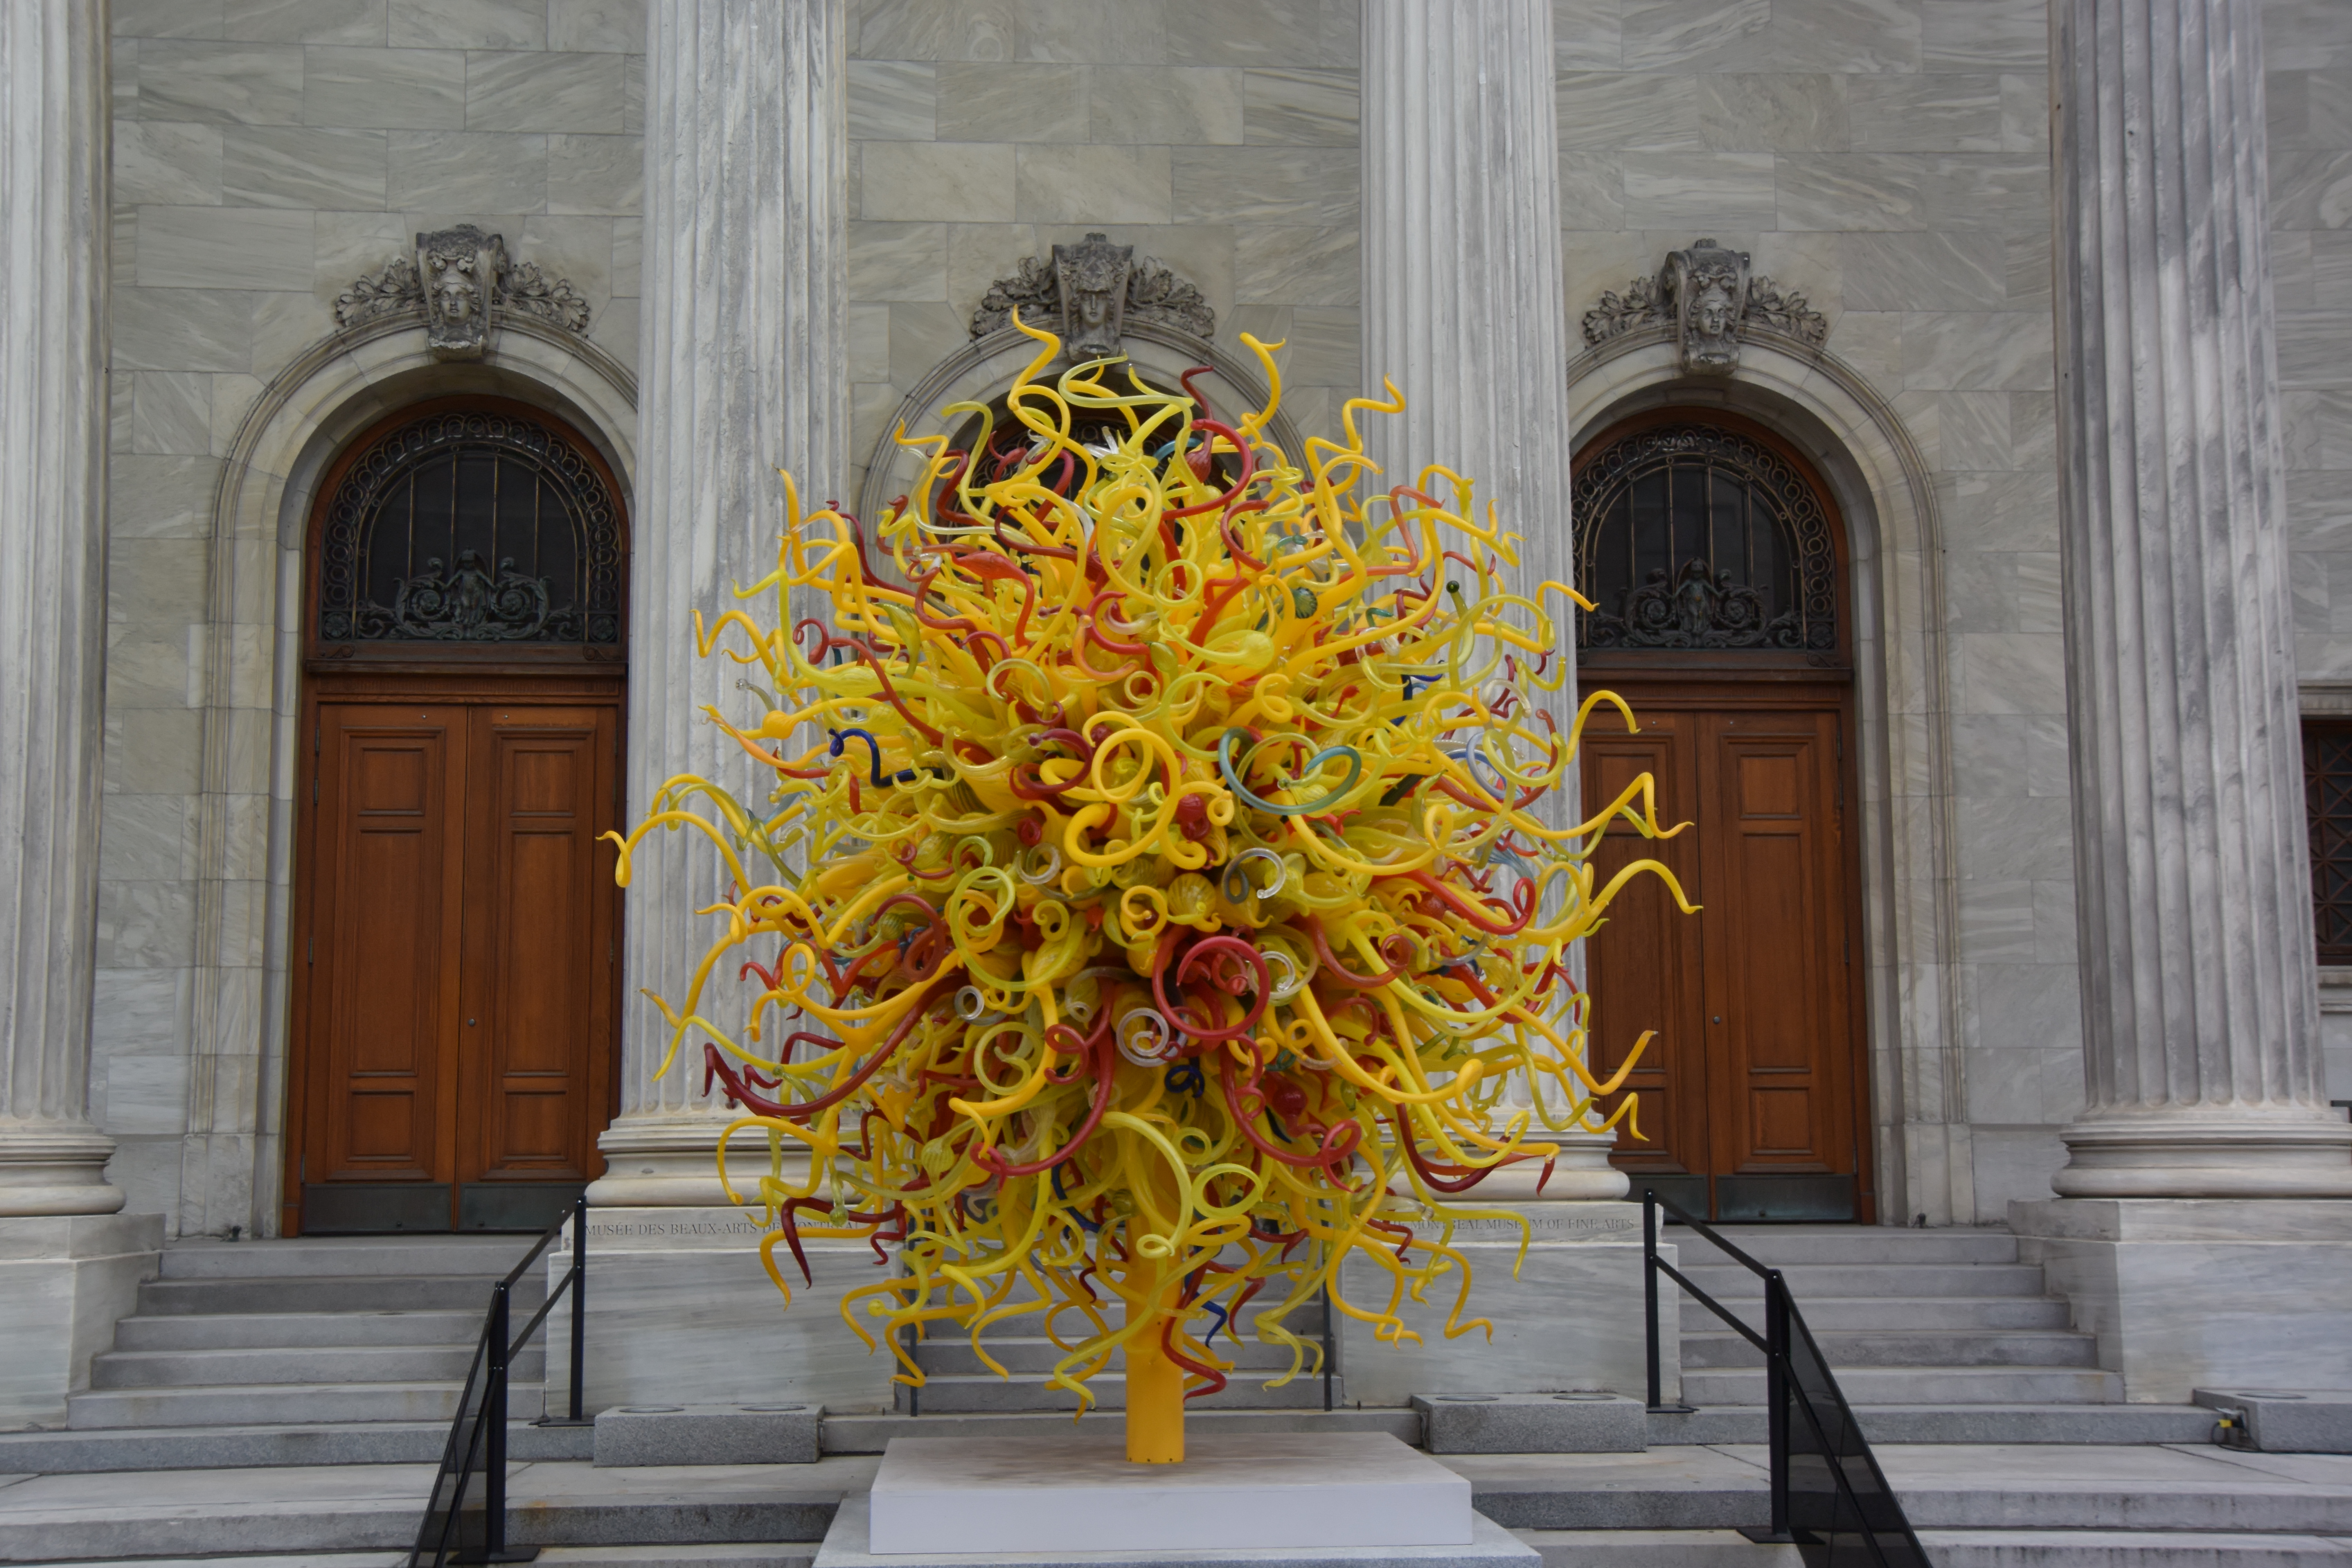 Glasskulptur  Museum of Modern Art, Montreal - "Le Soleil" von Chihuly 